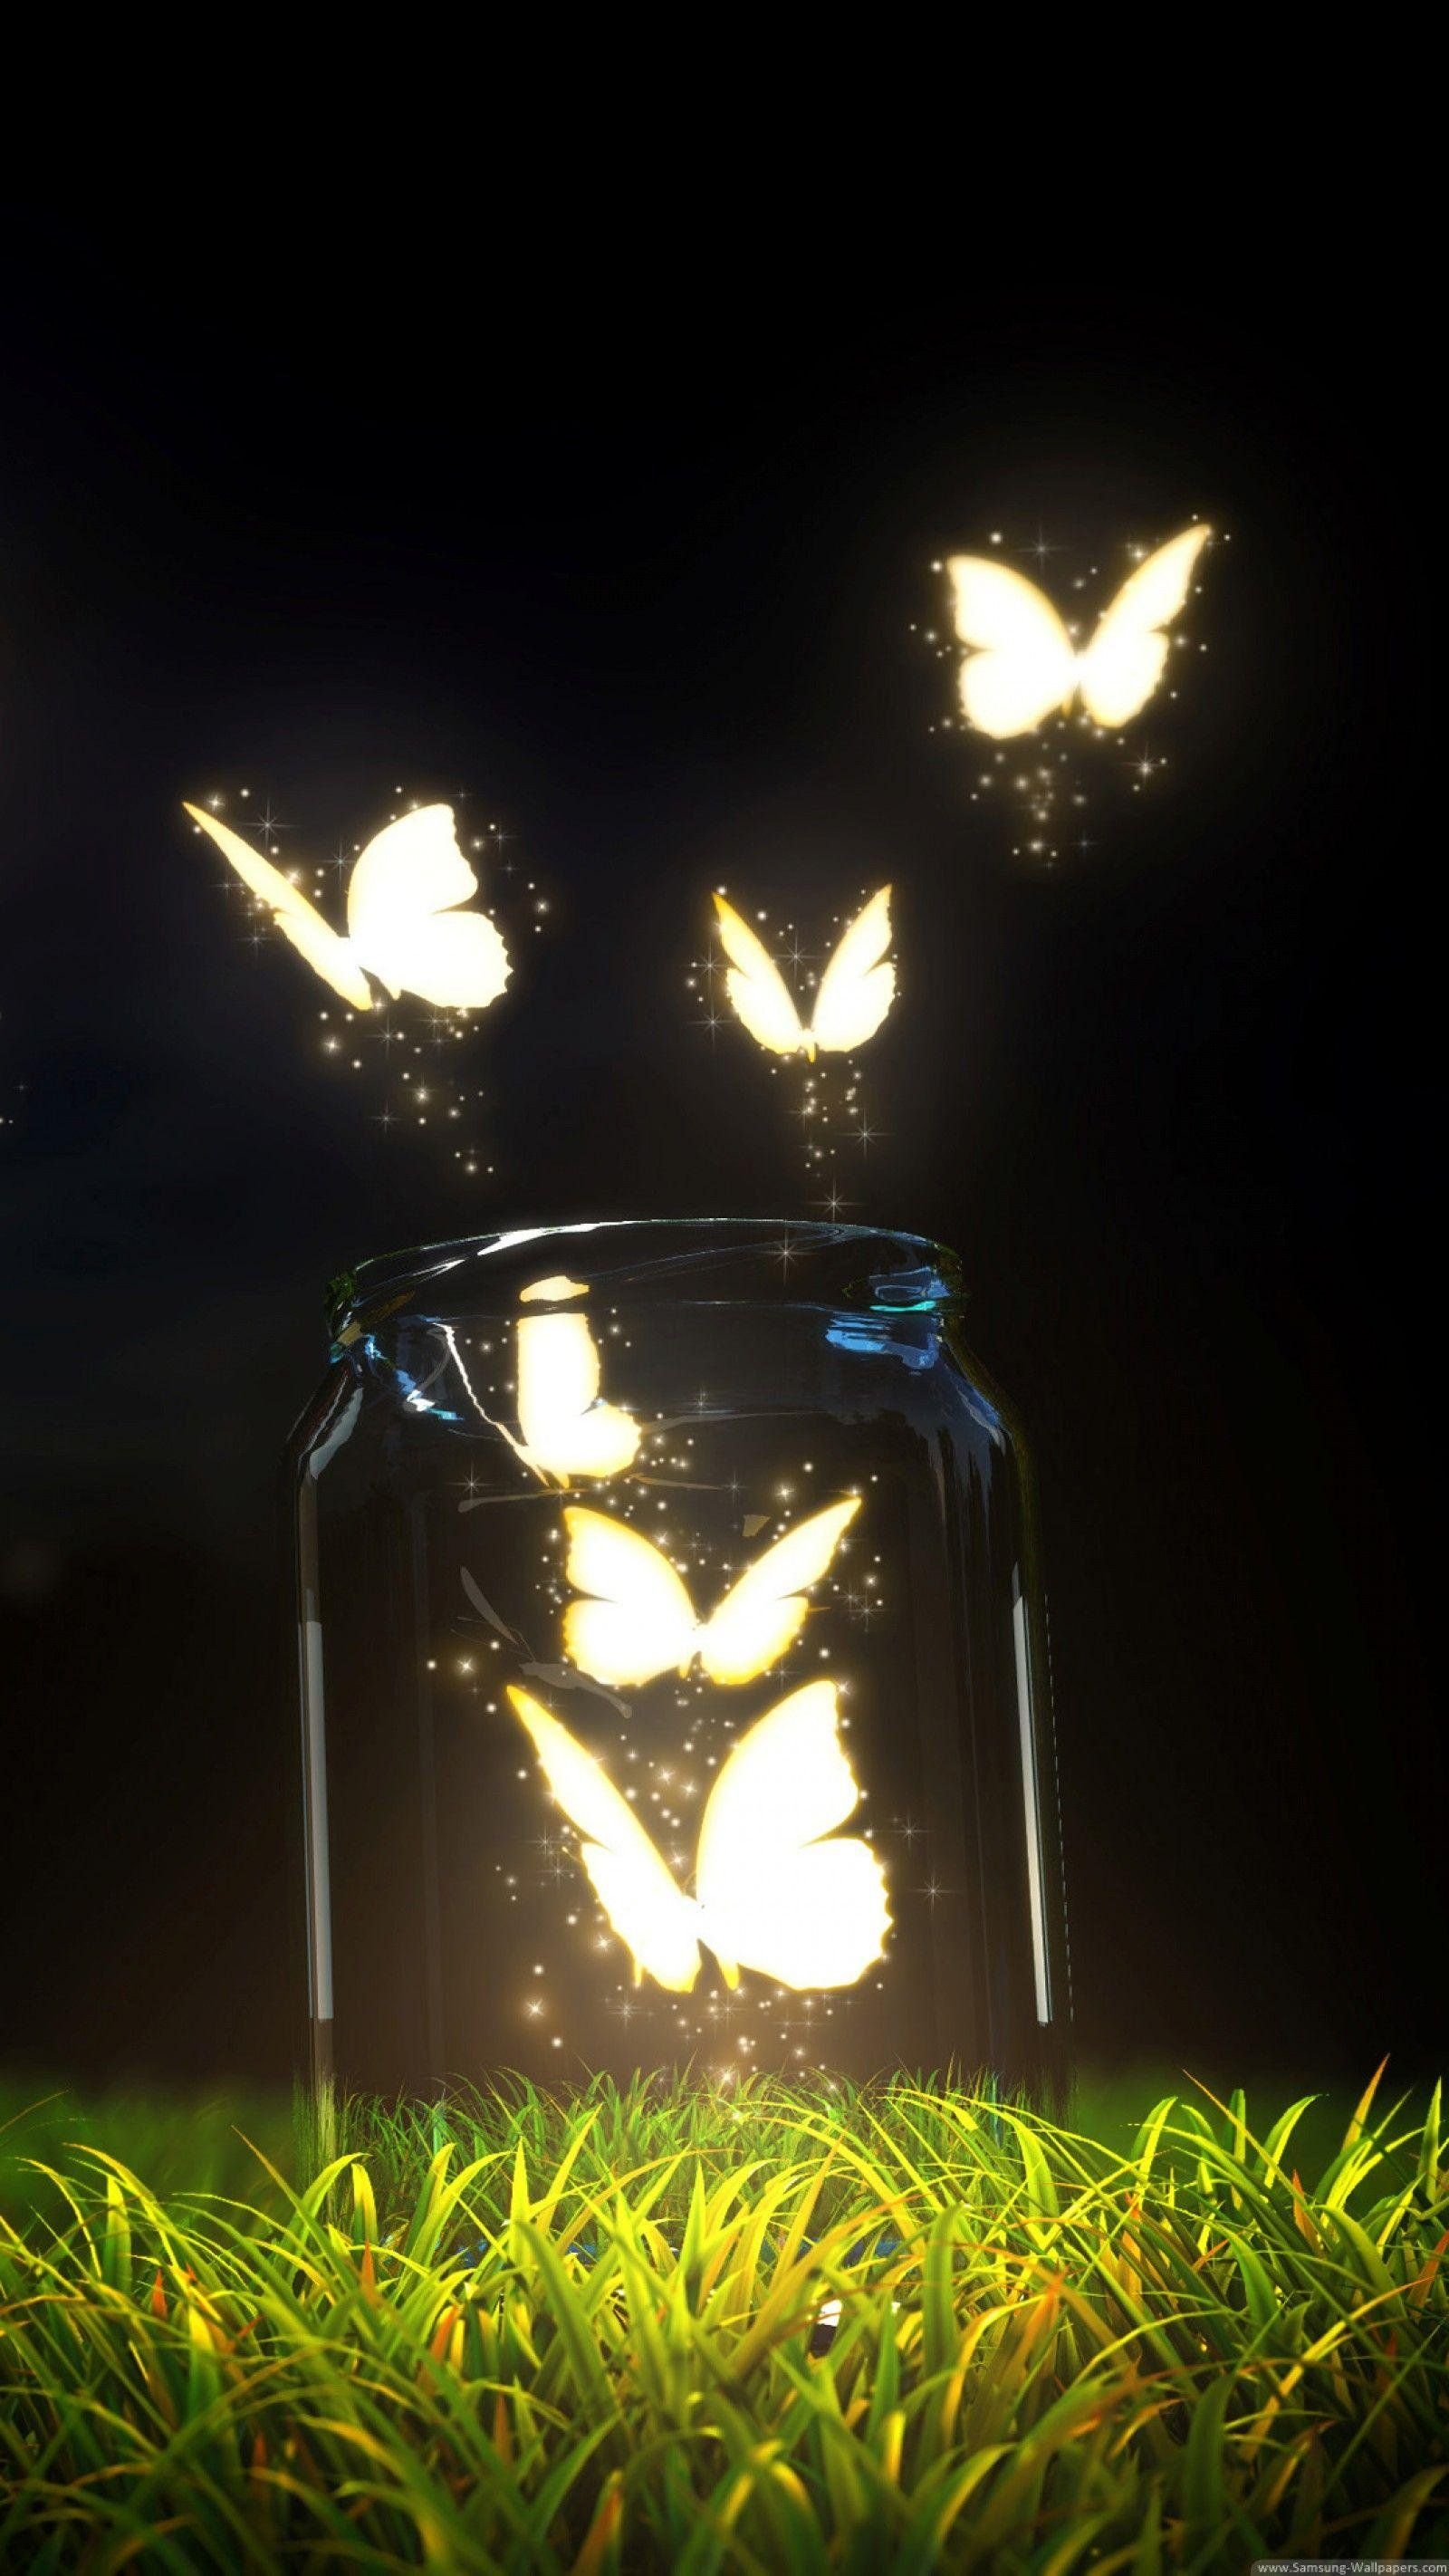 Aesthetic magic butterflies Wallpaper Download